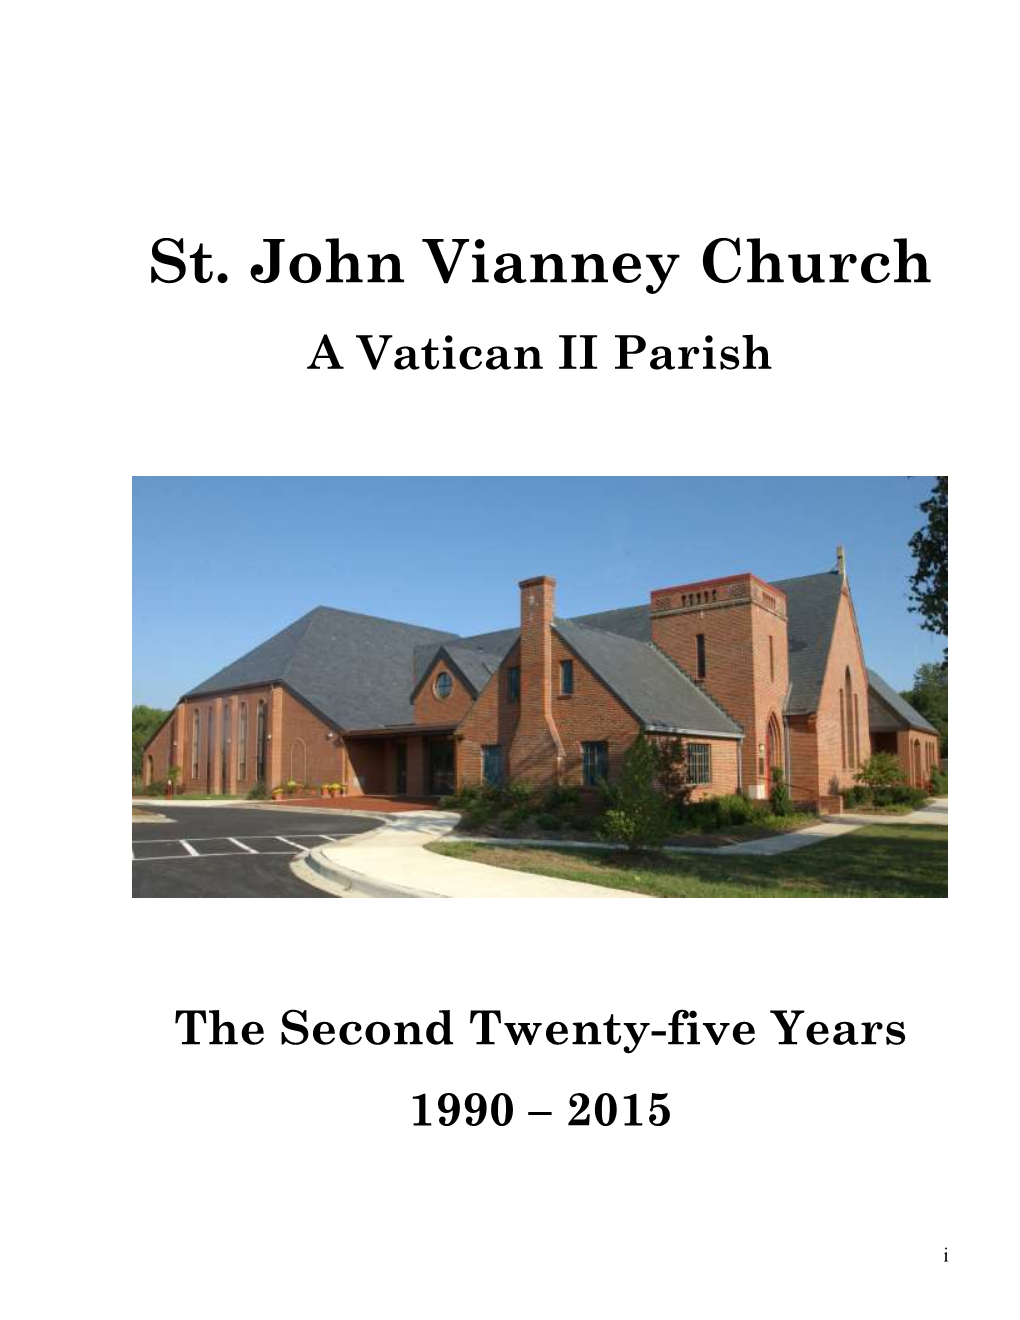 St. John Vianney Church a Vatican II Parish